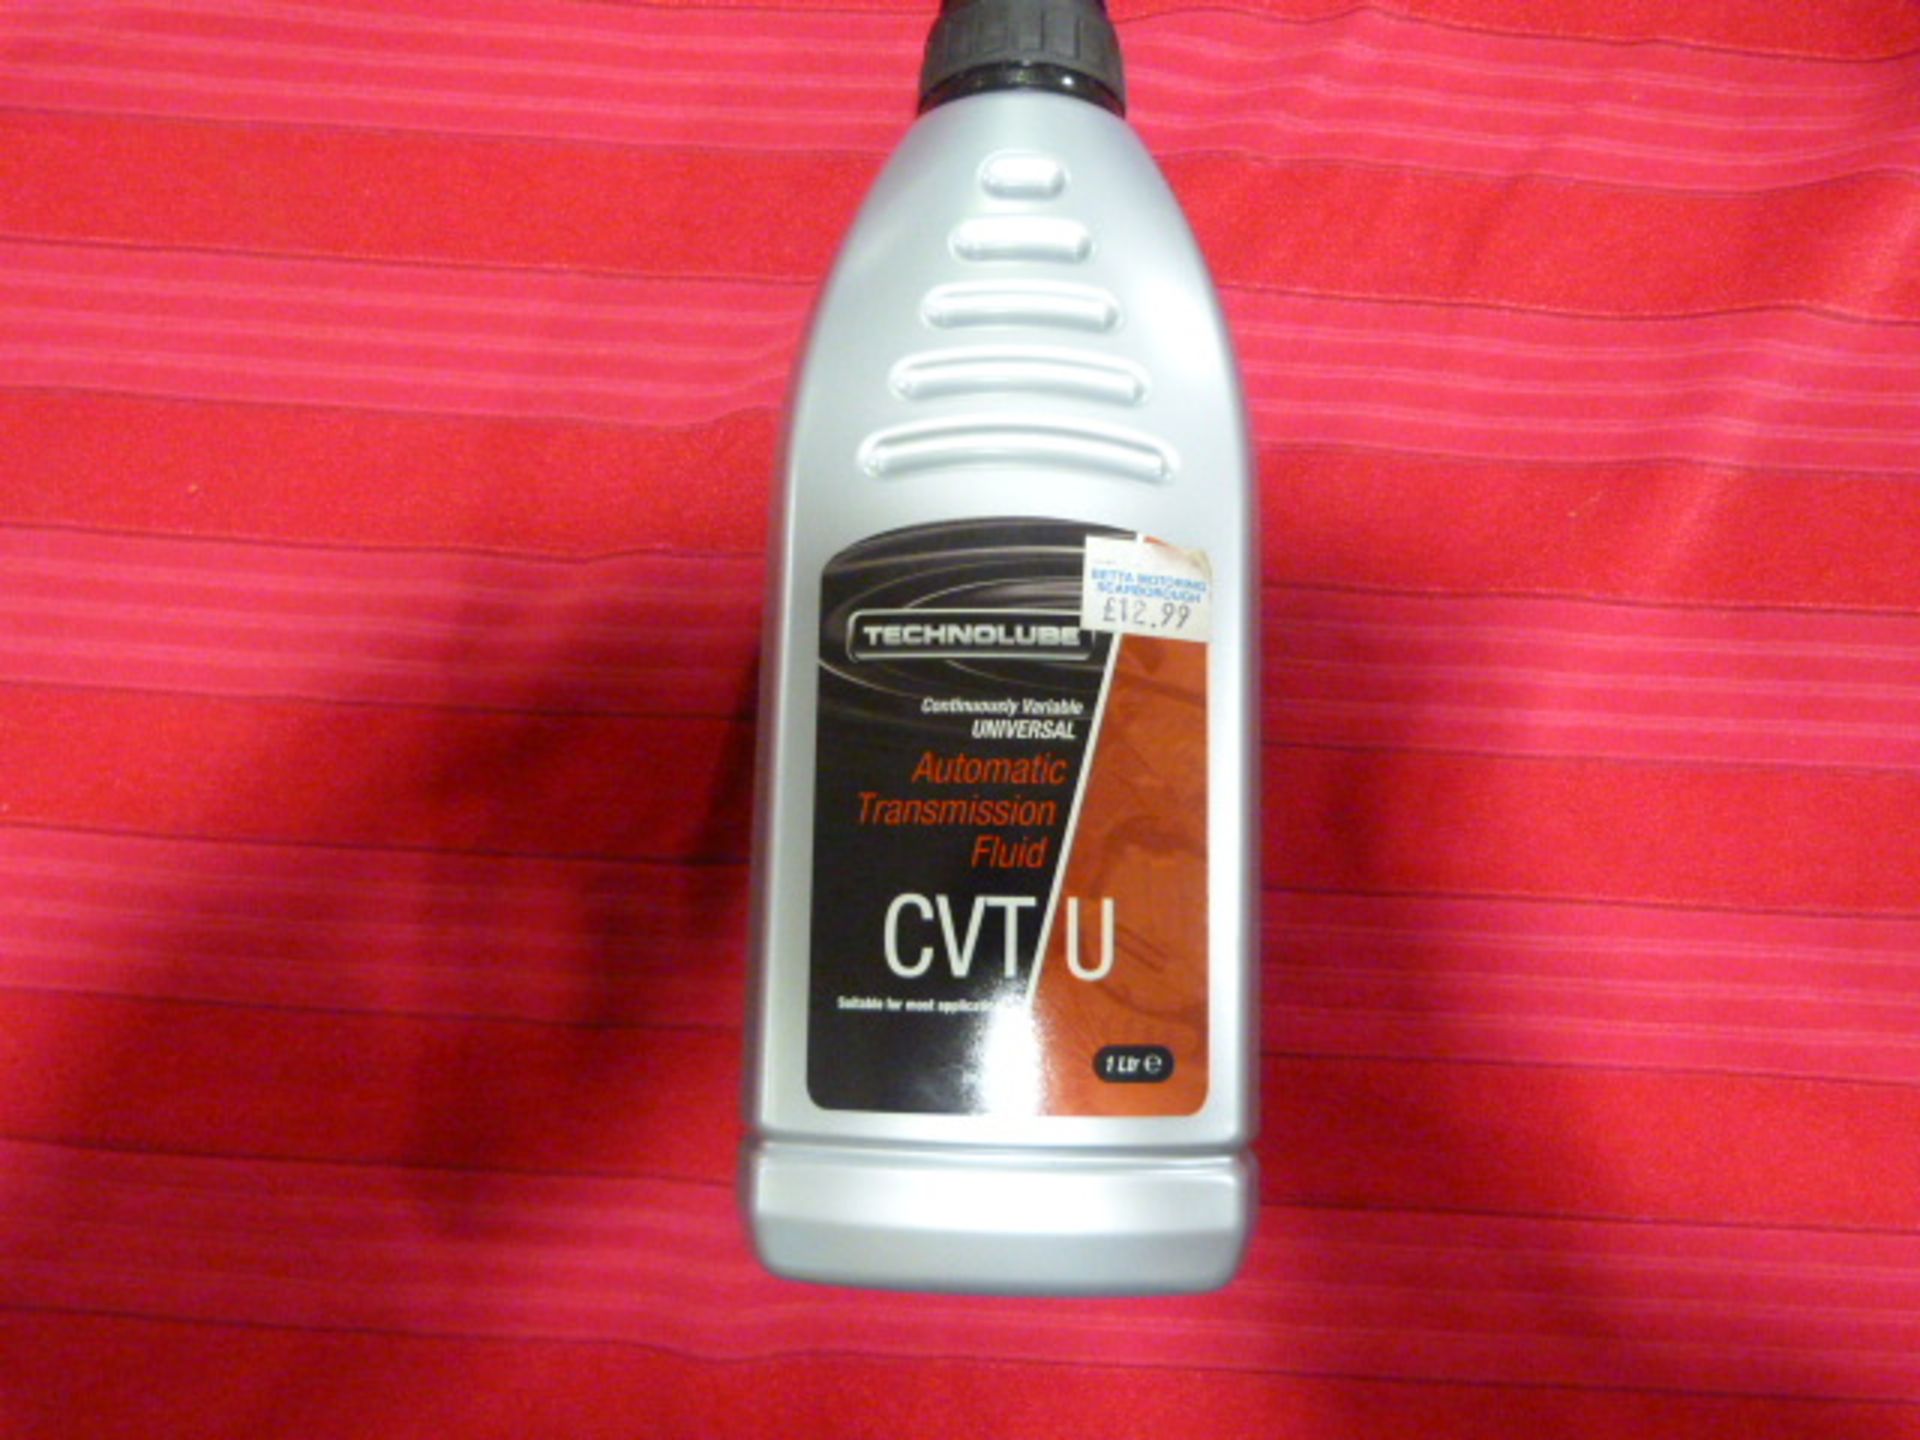 *1L Bottle of CDTU Transmission Fluid